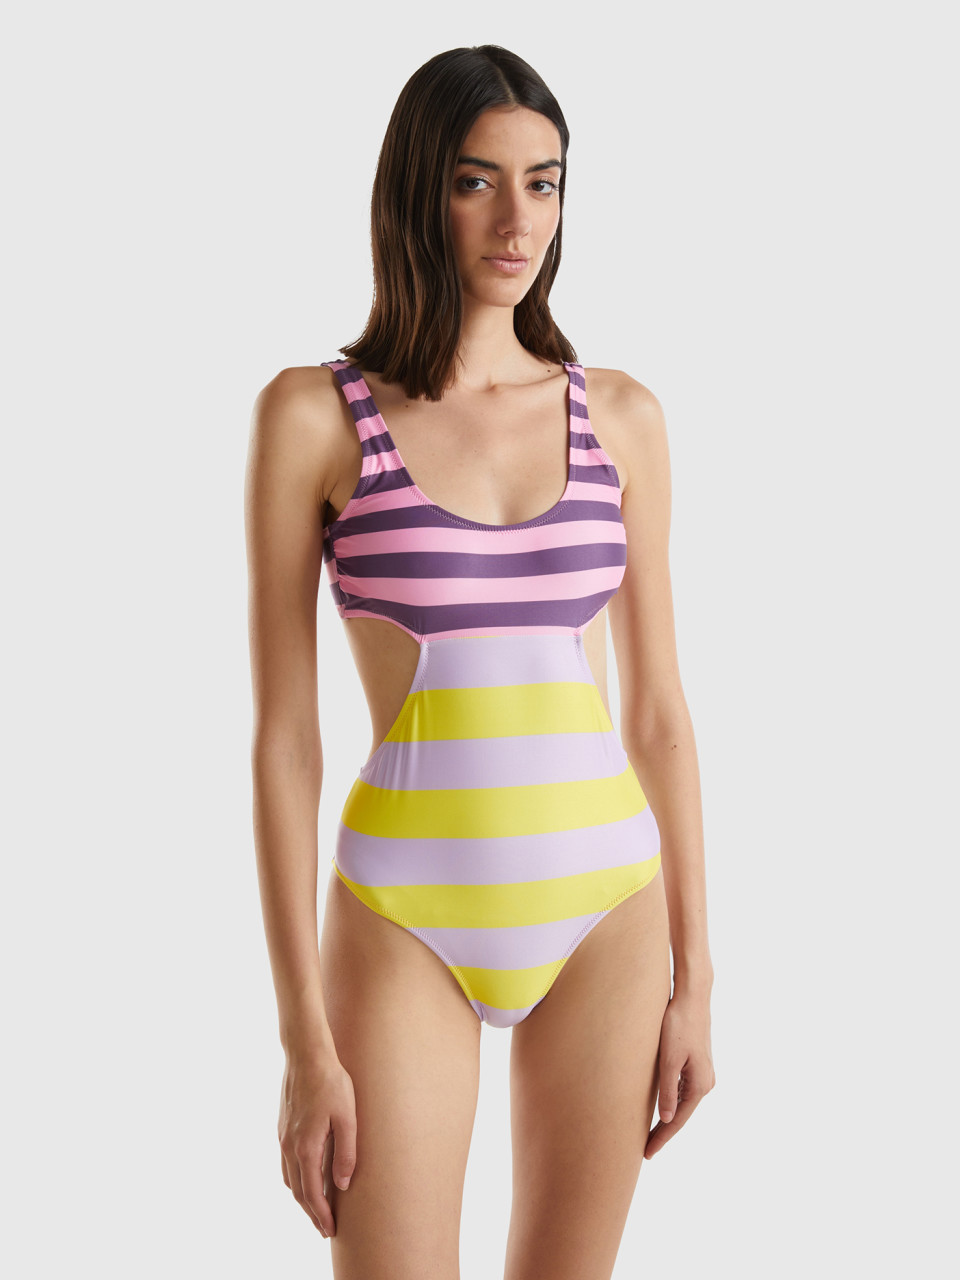 Benetton, Striped Cut-out One-piece Swimsuit, Multi-color, Women